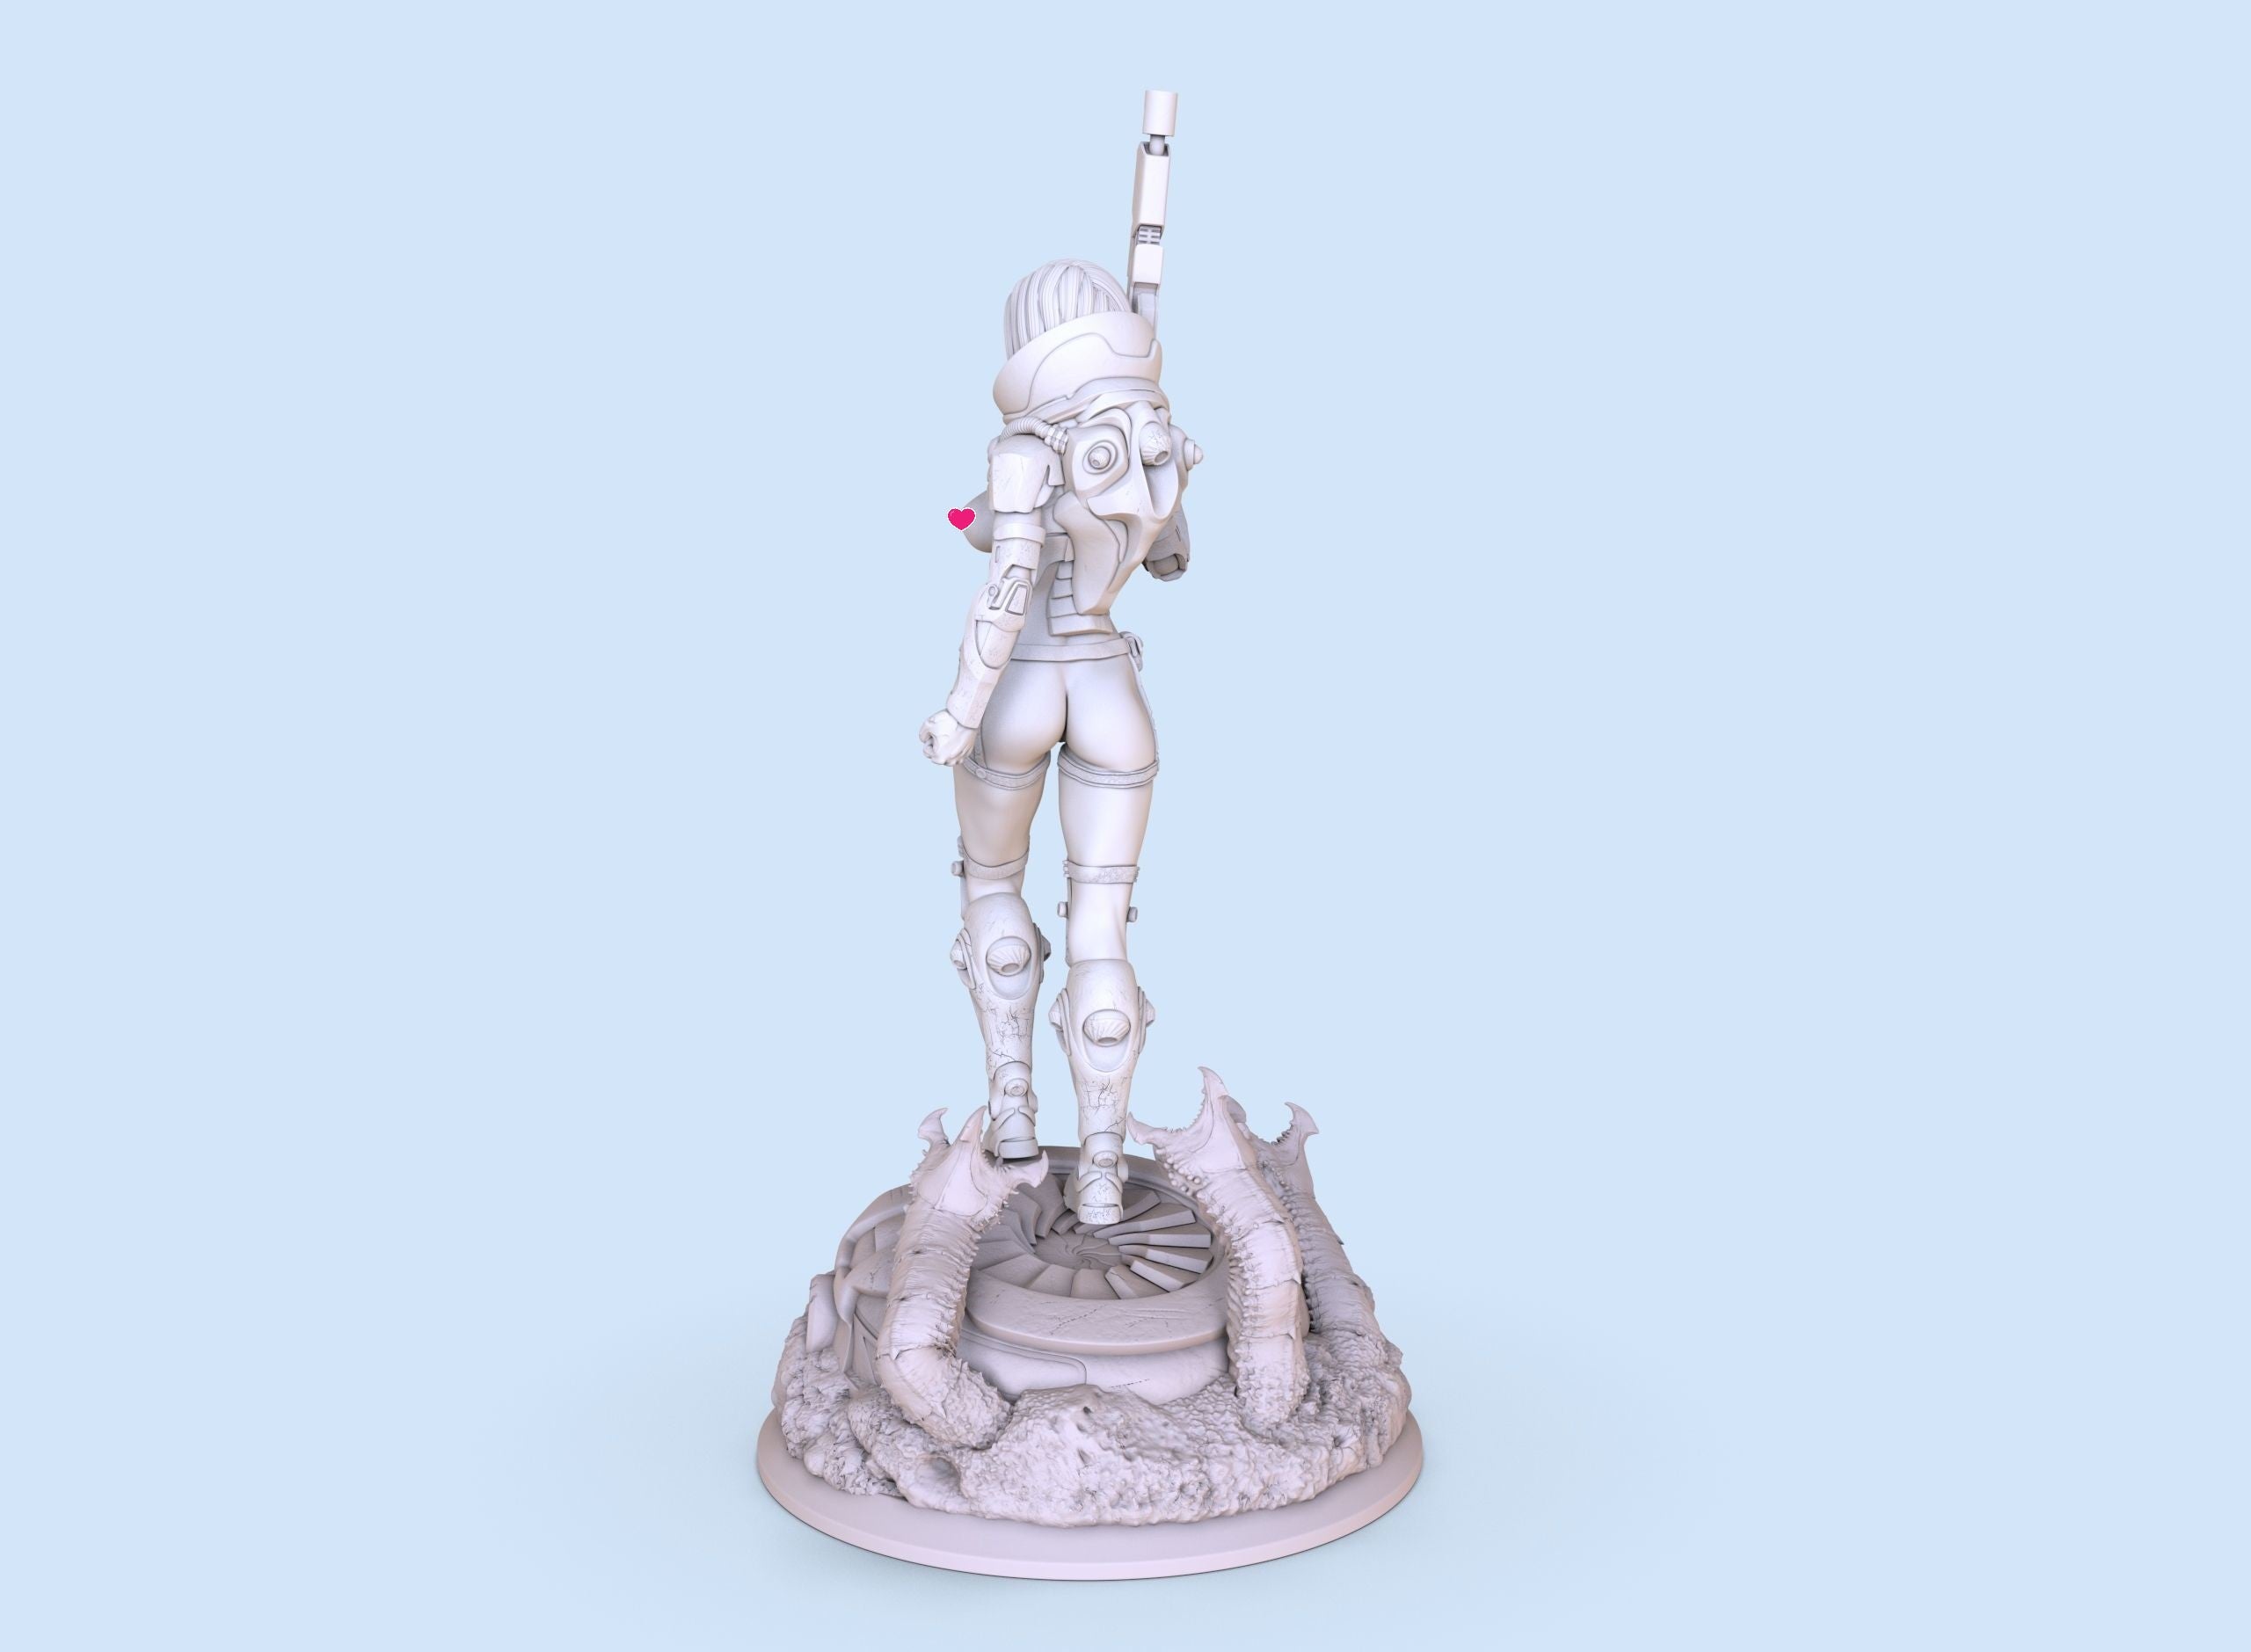 Space Warrior - 3D Print - Fan Art - 180mm SFW/NSFW